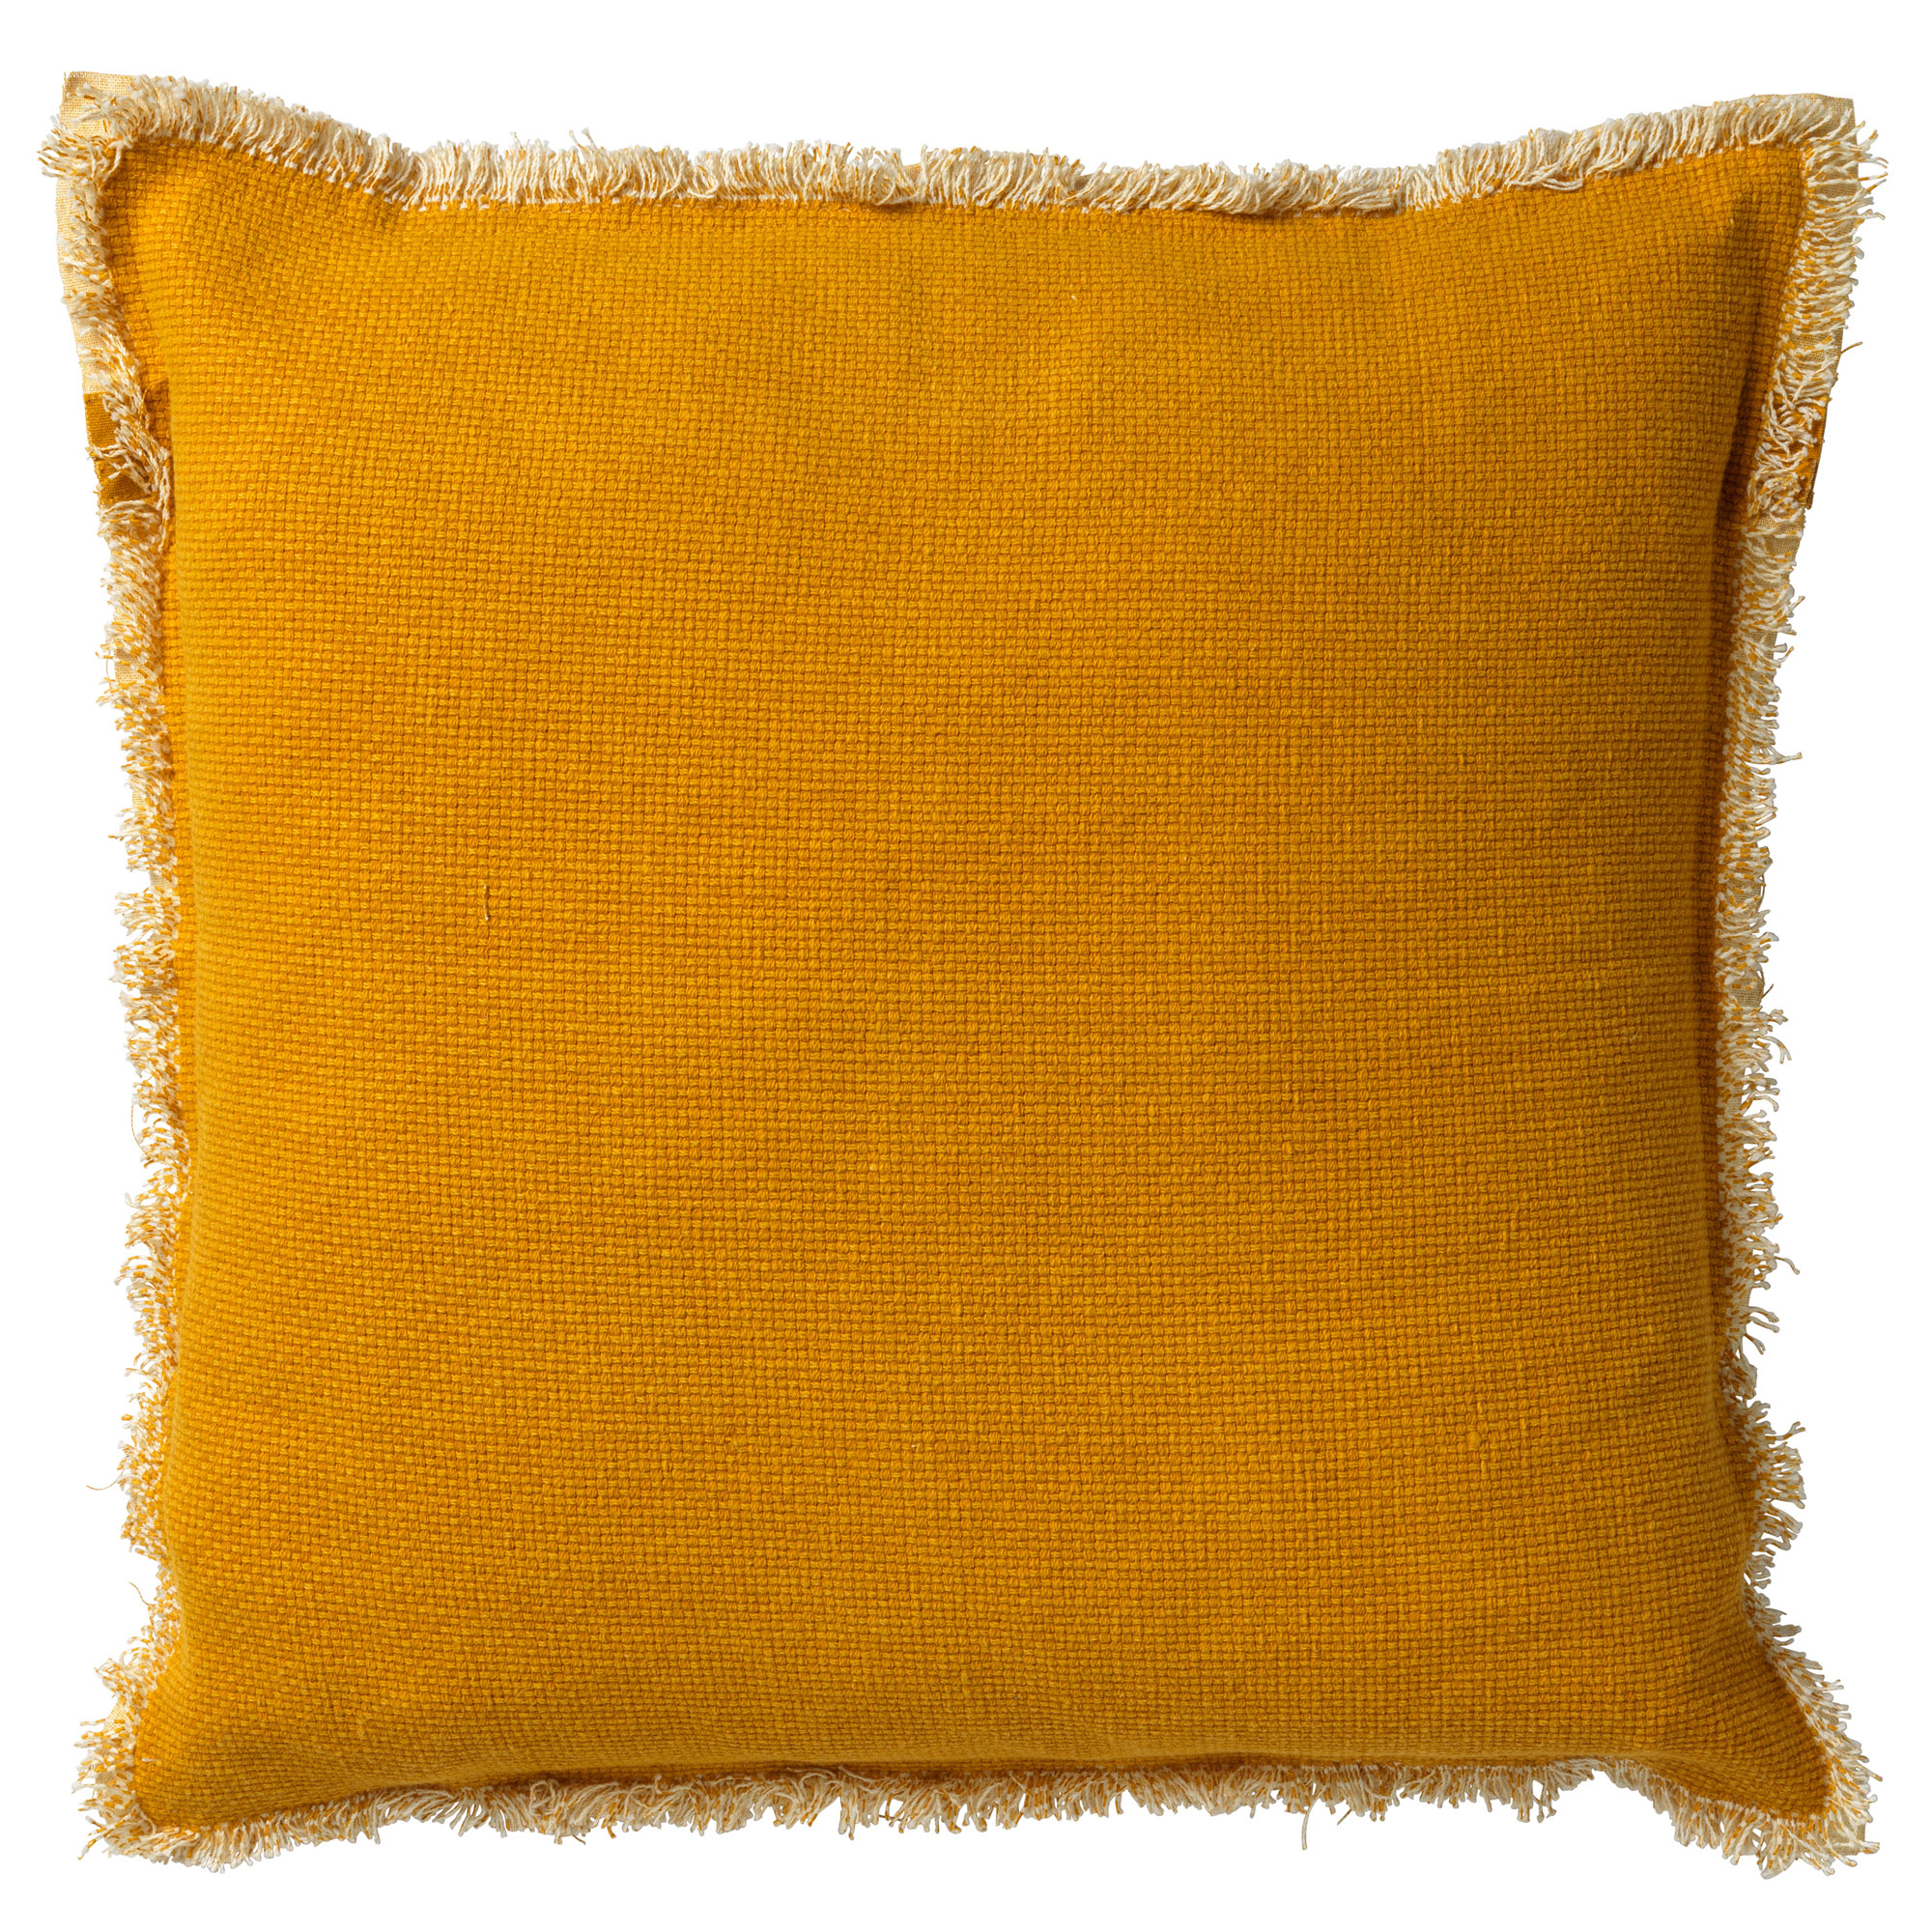 BURTO - Cushion 45x45 cm Golden Glow - yellow-ochre